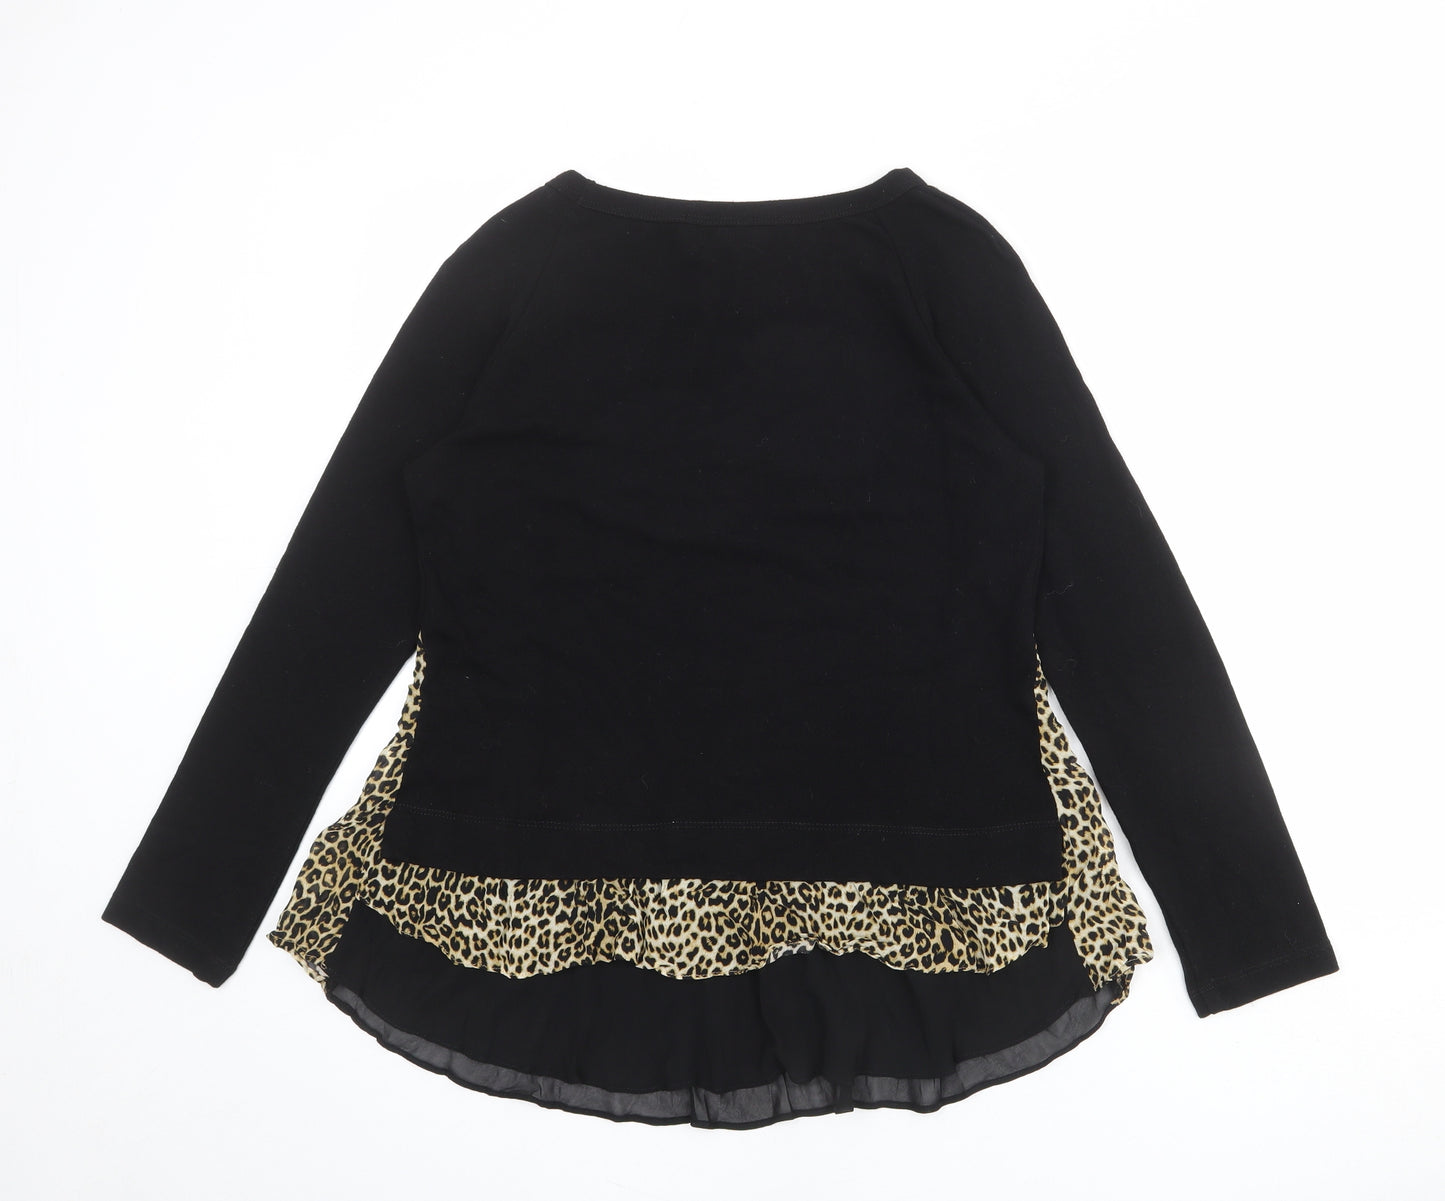 Karen Kane Womens Black Round Neck Polyester Pullover Jumper Size M